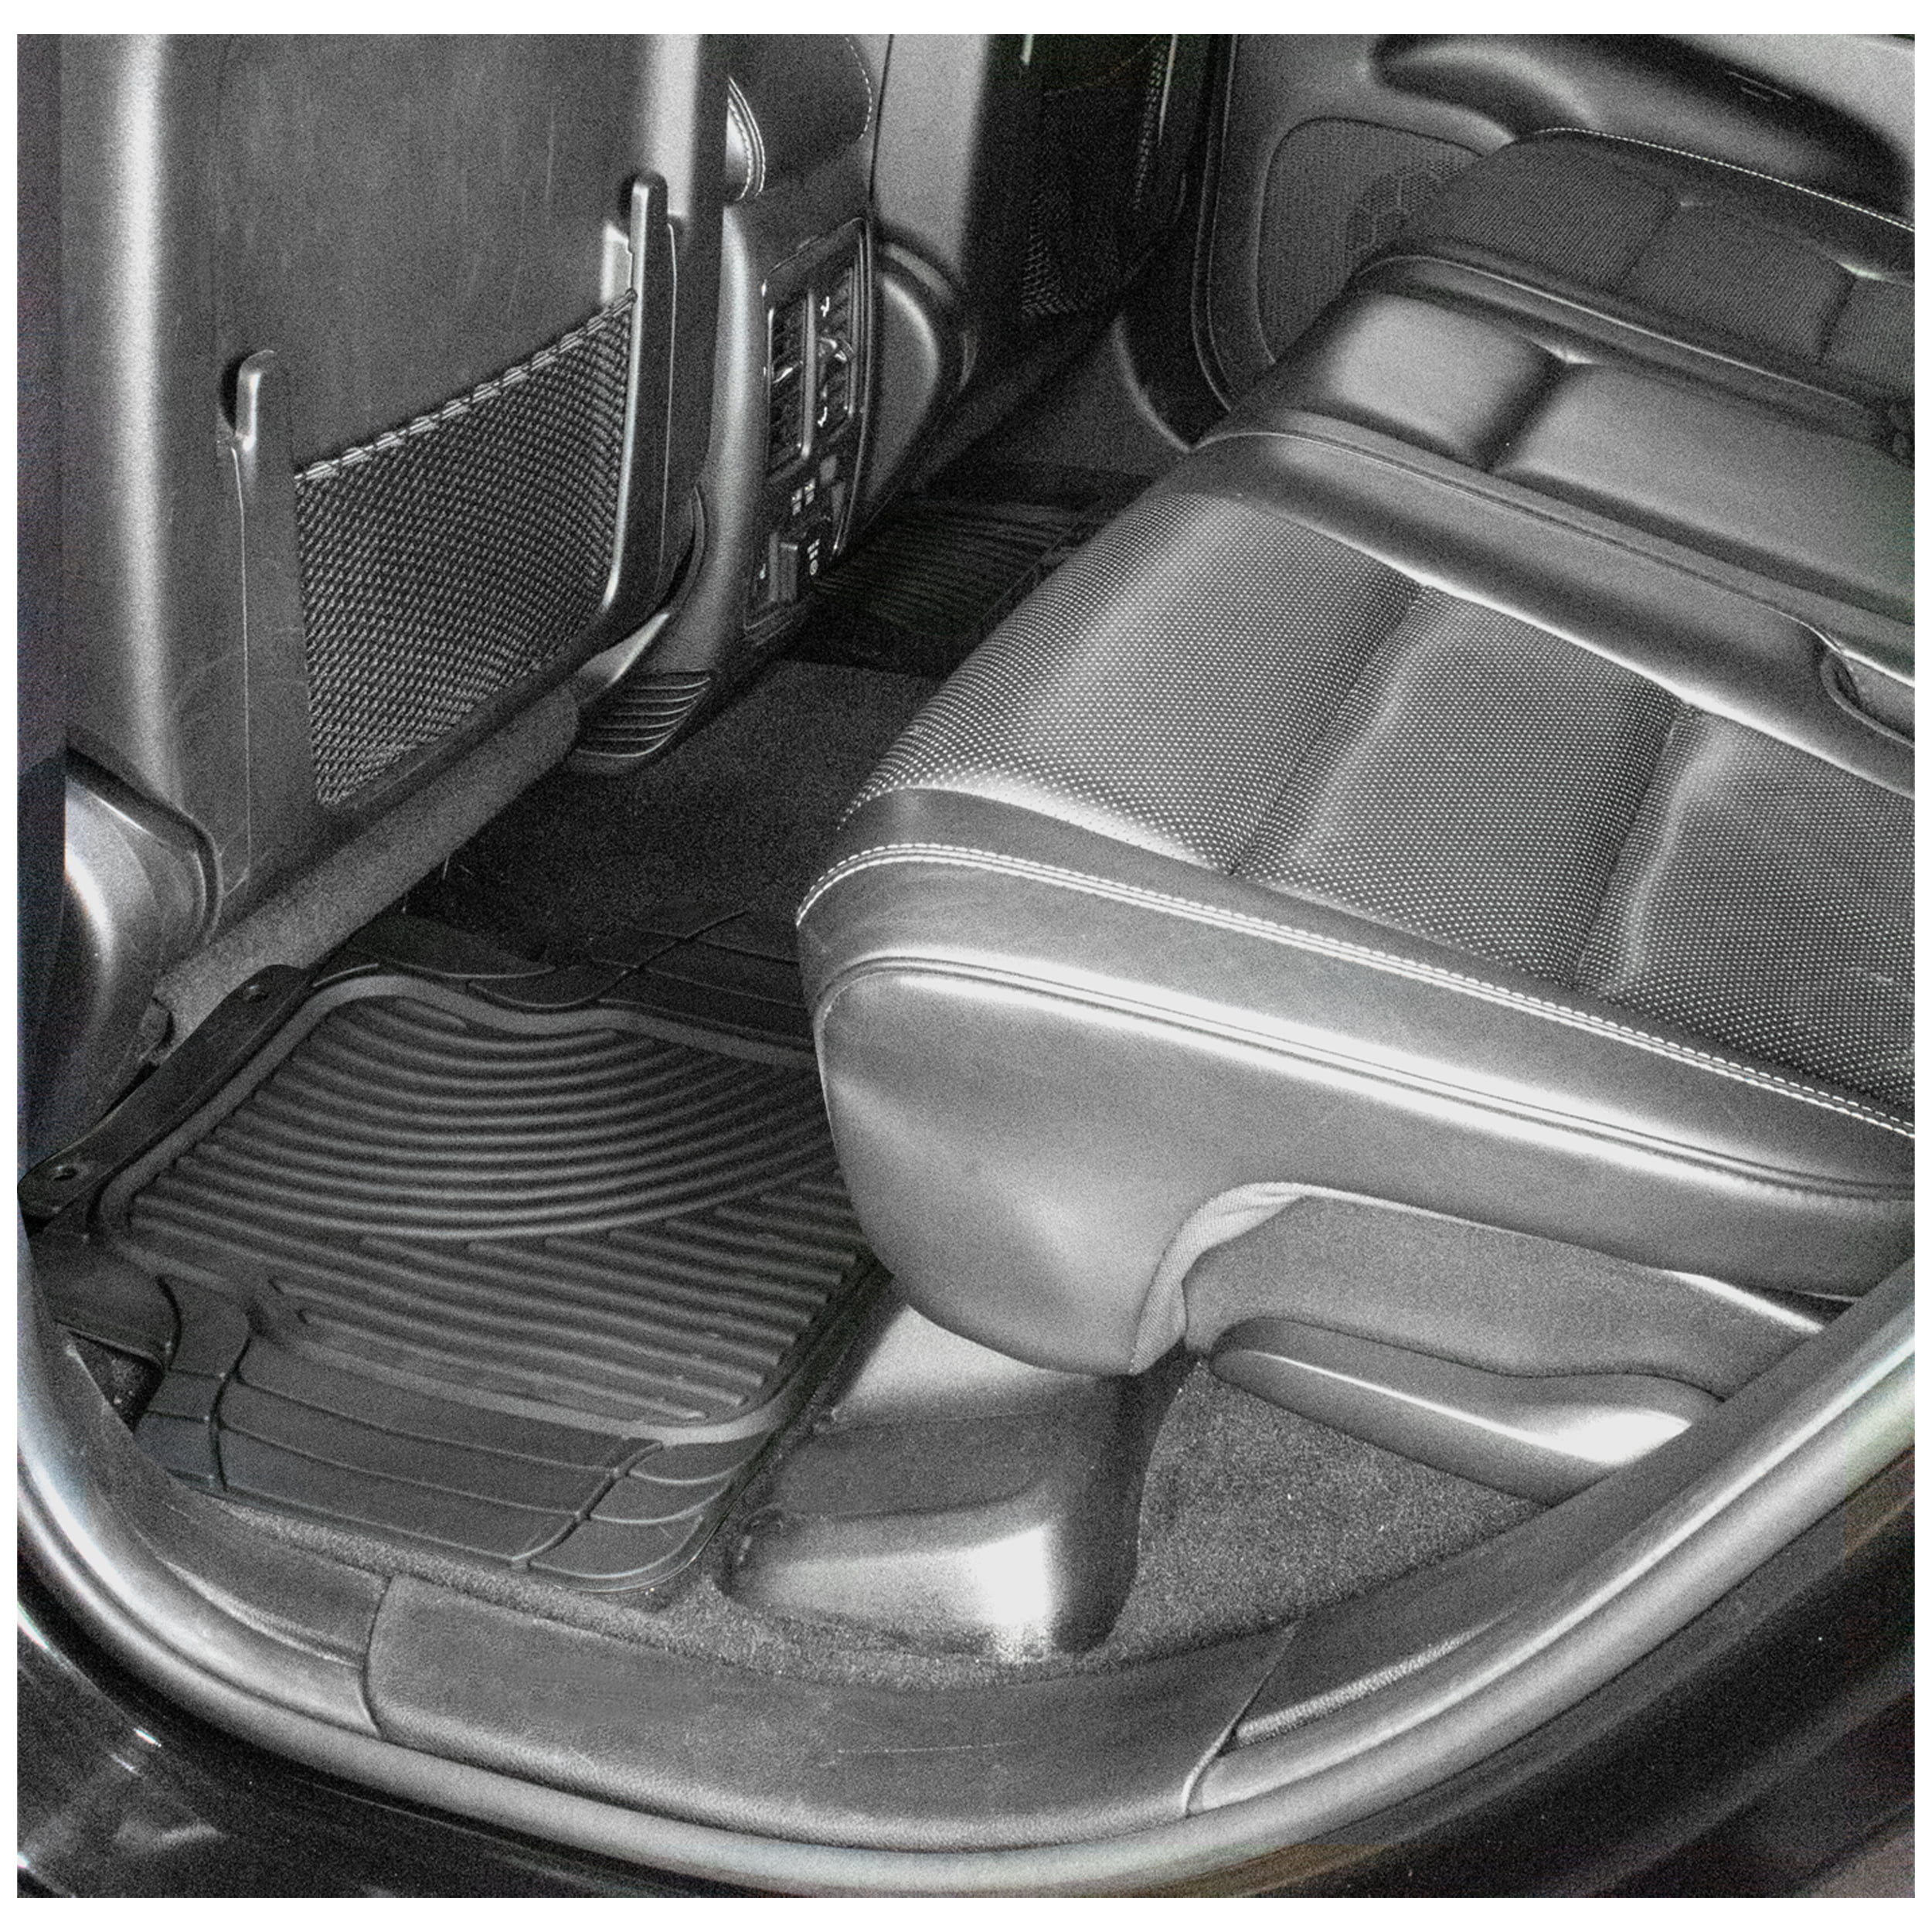  Sword and Shield Car Floor Mats 4 Piece Front & Rear Set Anti  Slip Foot Carpet Universal Fit for Most Car : Automotive